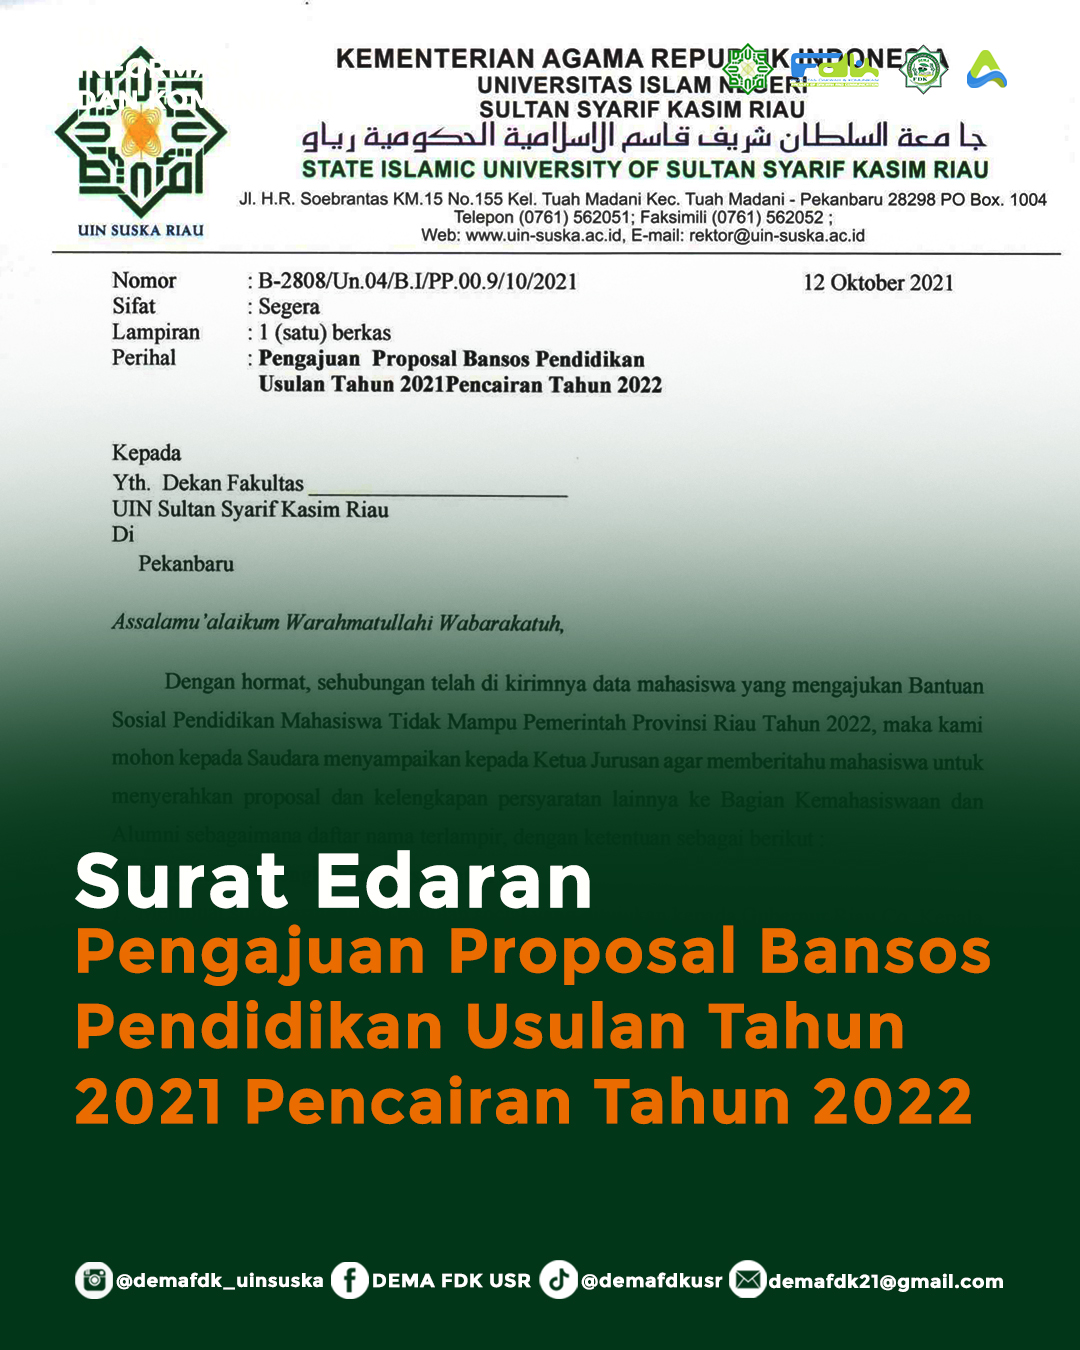 Surat Edaran Pengajuan Proposal Bansos Pendidikan Usulan 2021 Pencairan 2022